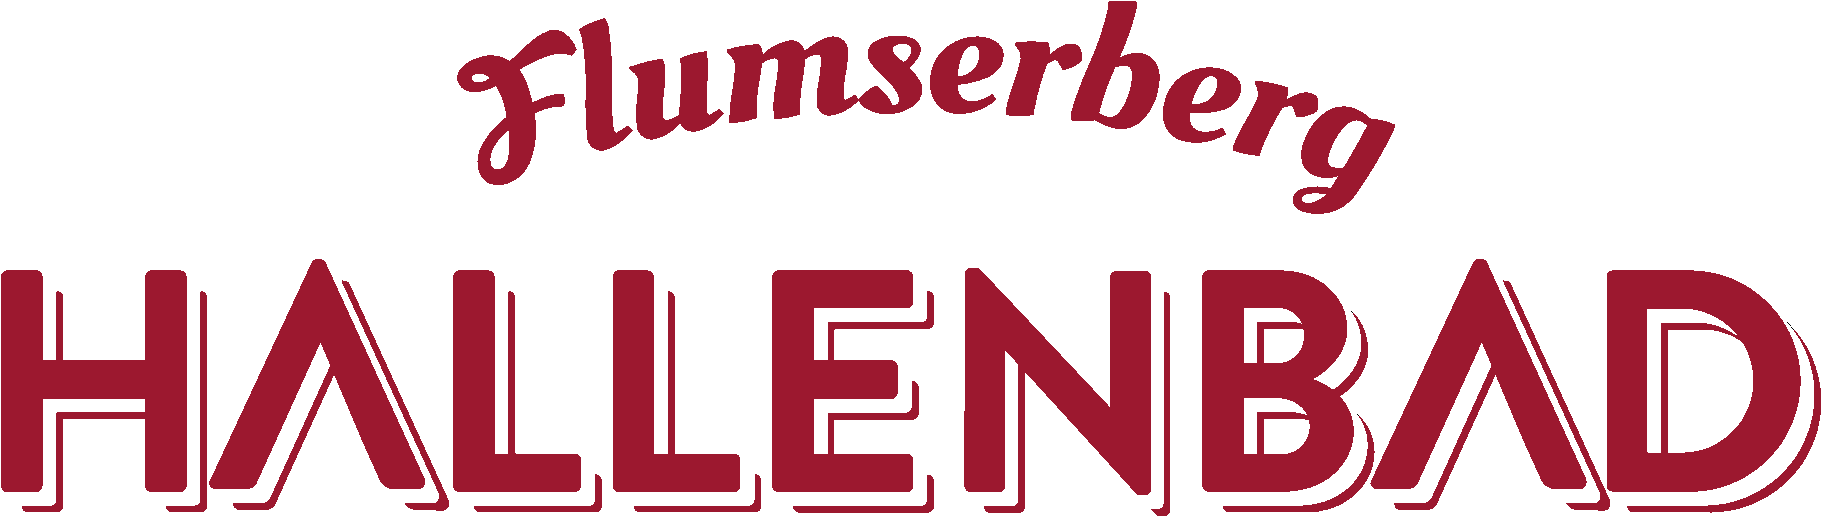 Hallenbad Flumserberg (Logo)